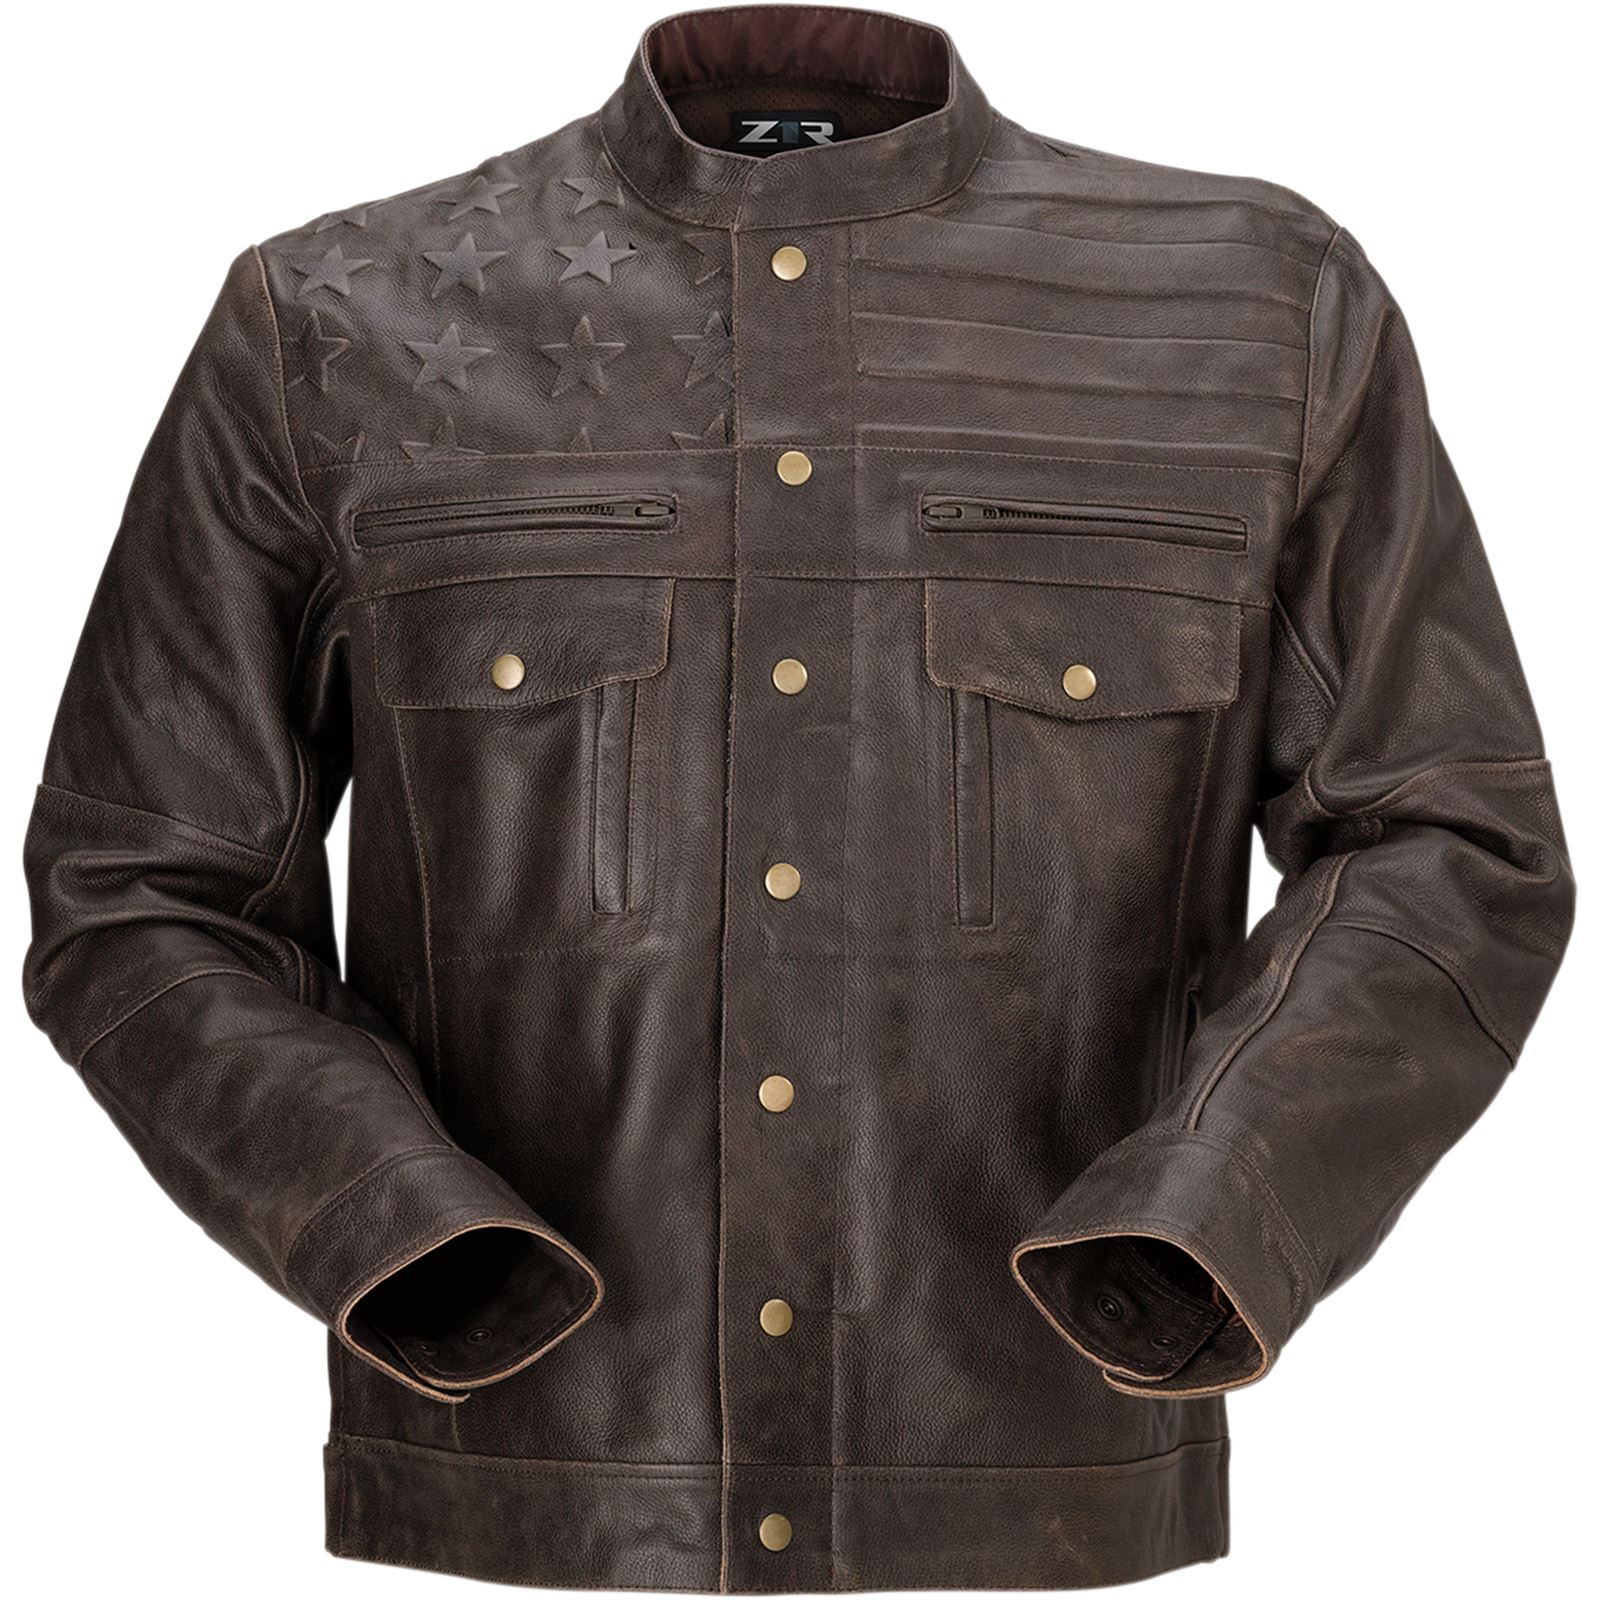 Z1R Deagle Leather Jacket - Brown 3XL